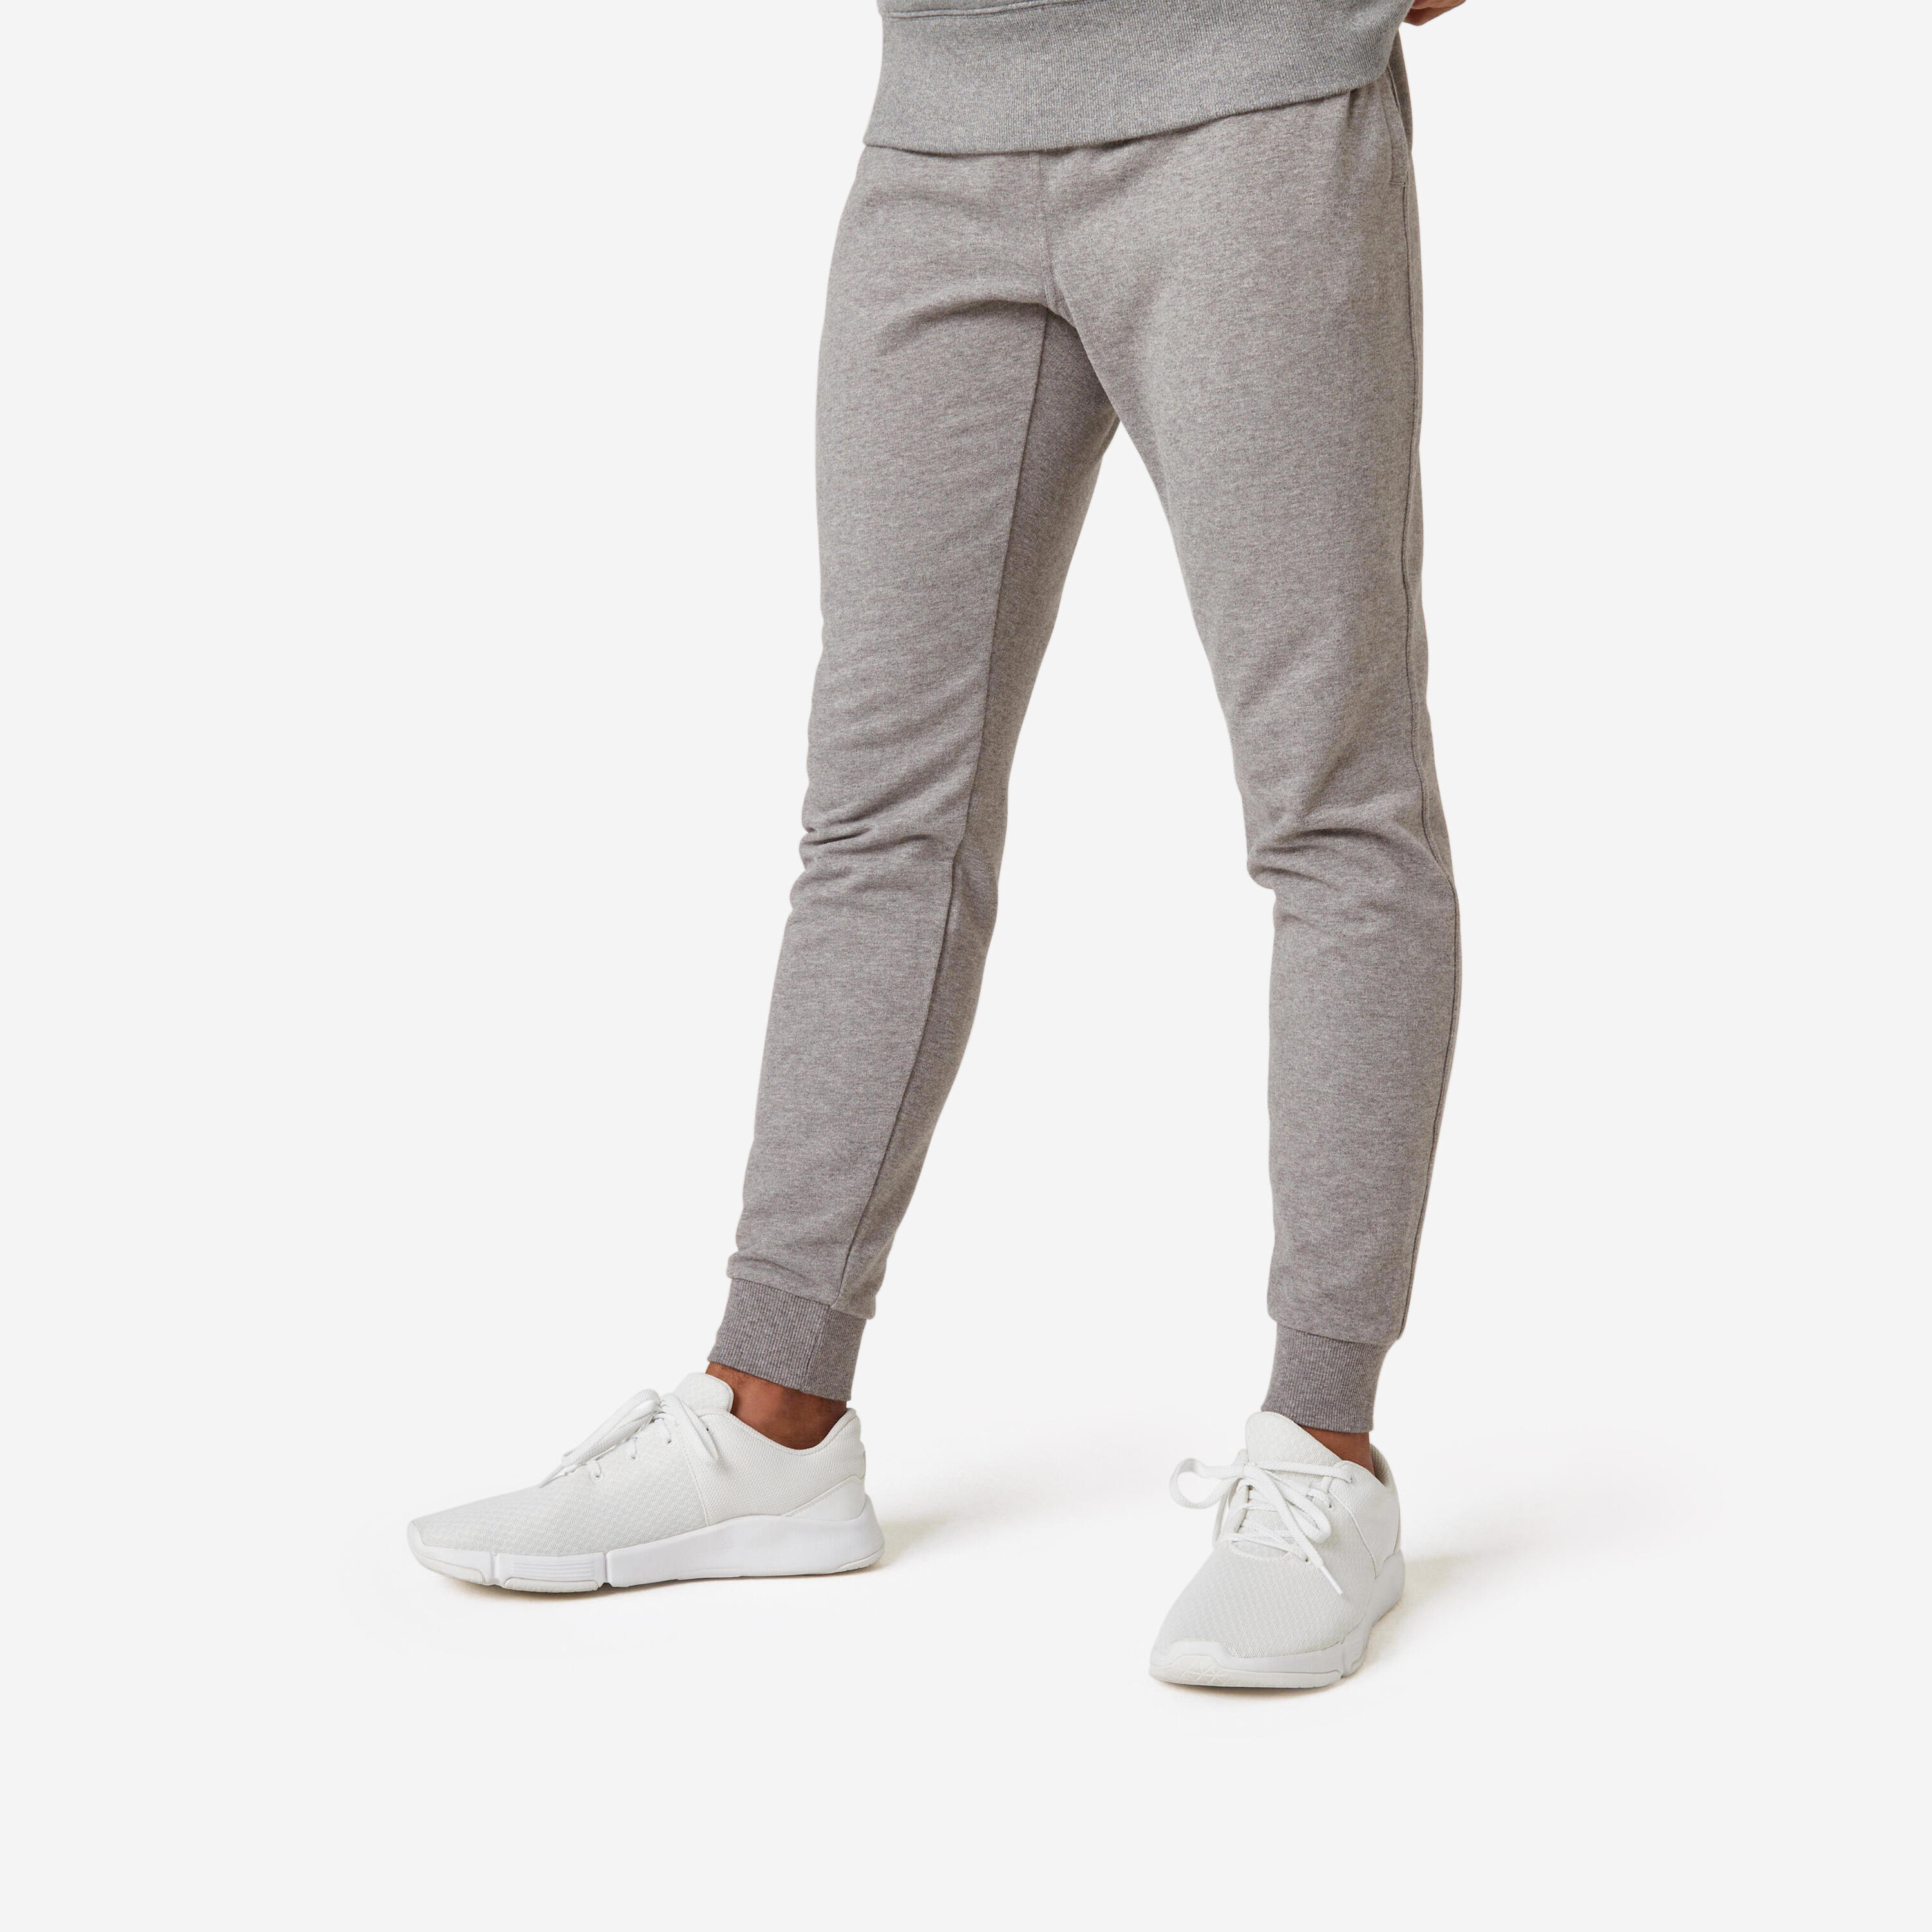 DOMYOS Men's comfortable slim-fit fitness jogging bottoms, grey